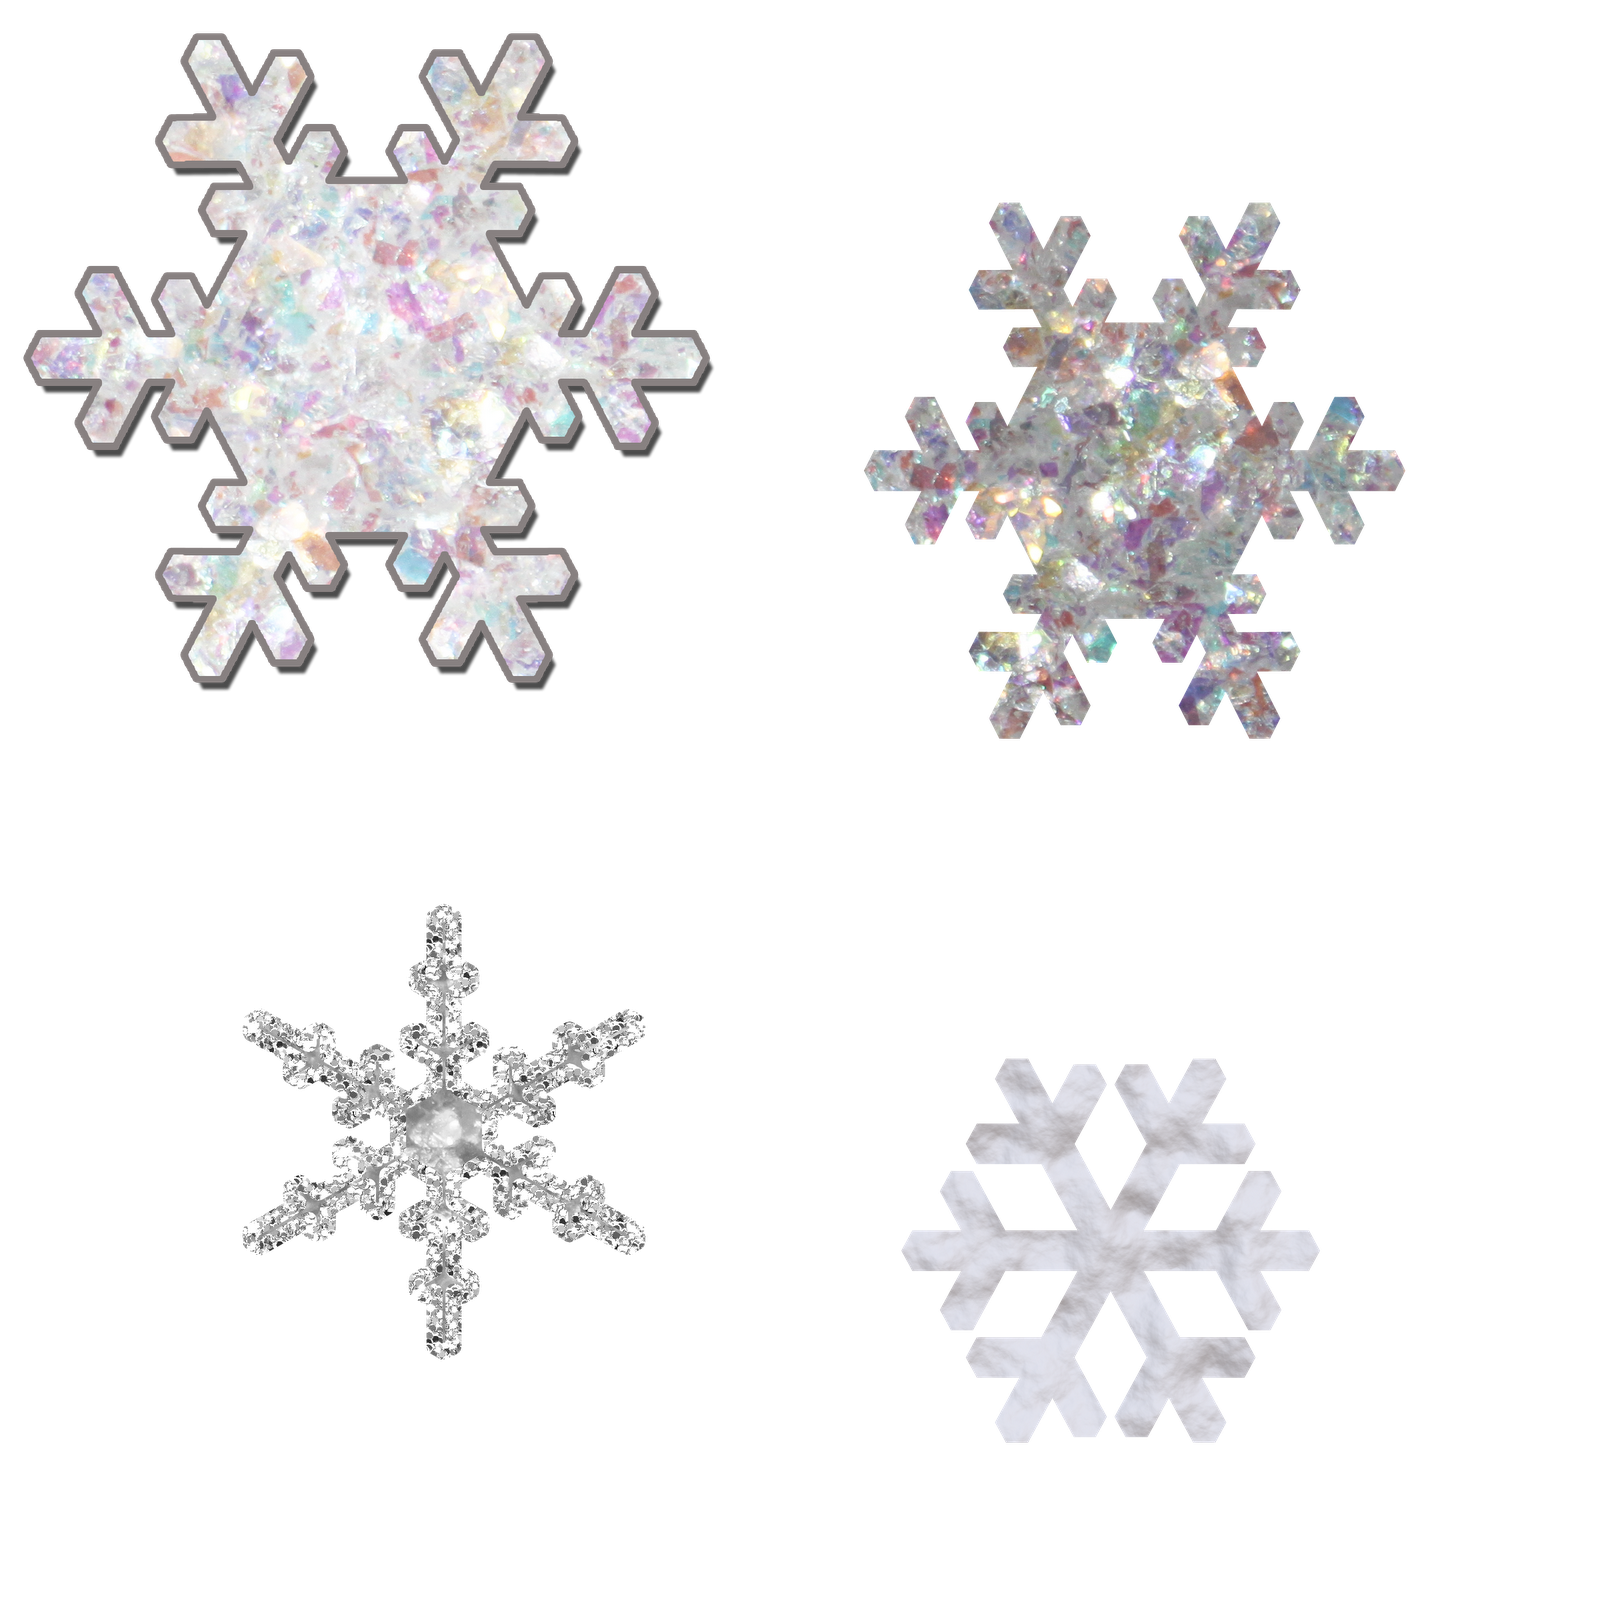 snowflake clipart transparent background - photo #42